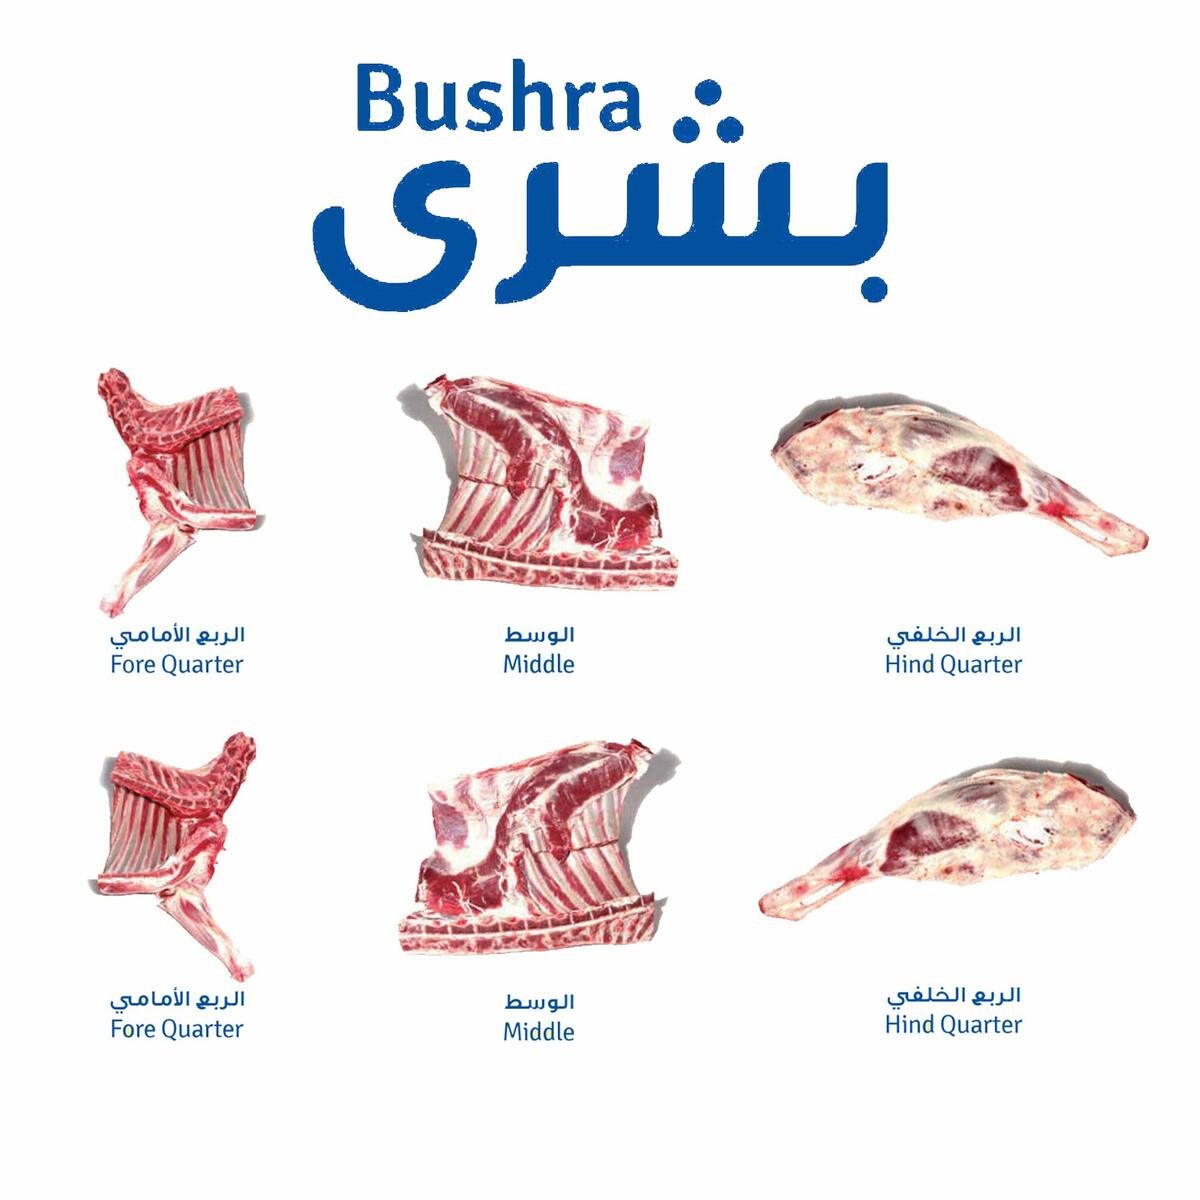 Bushra Lamb 6 Way Cut Whole Bone In 9-11kg